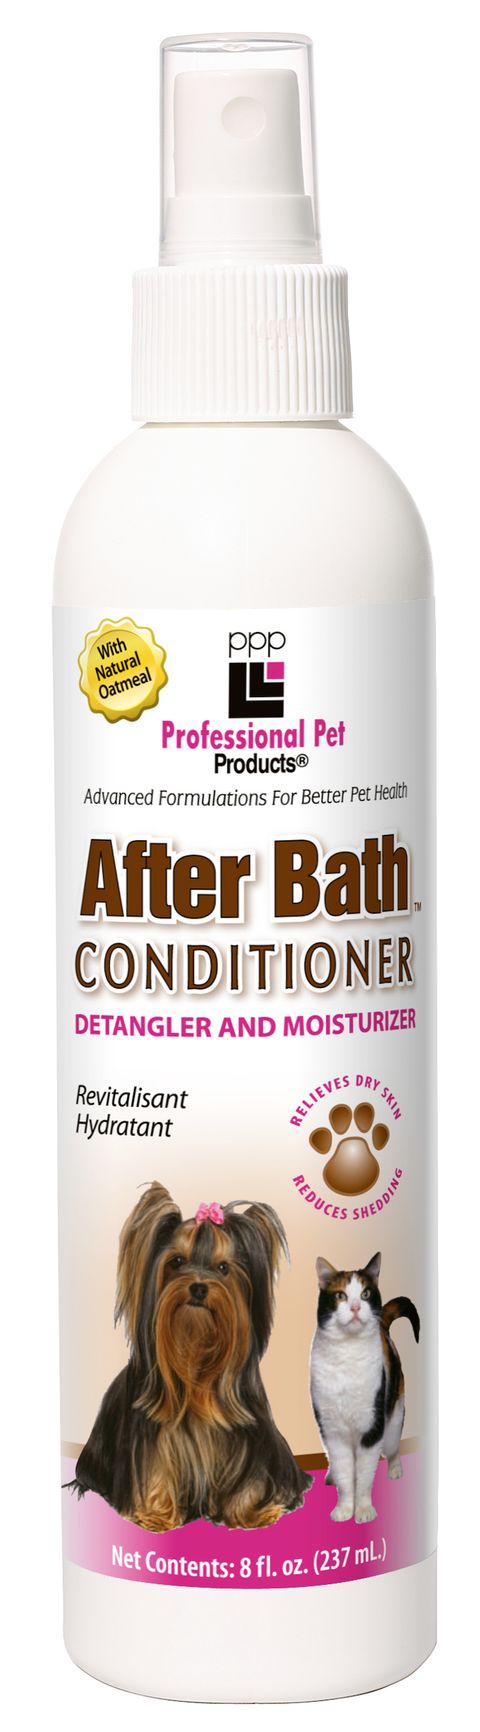 A501 After Bath Conditioner.jpg